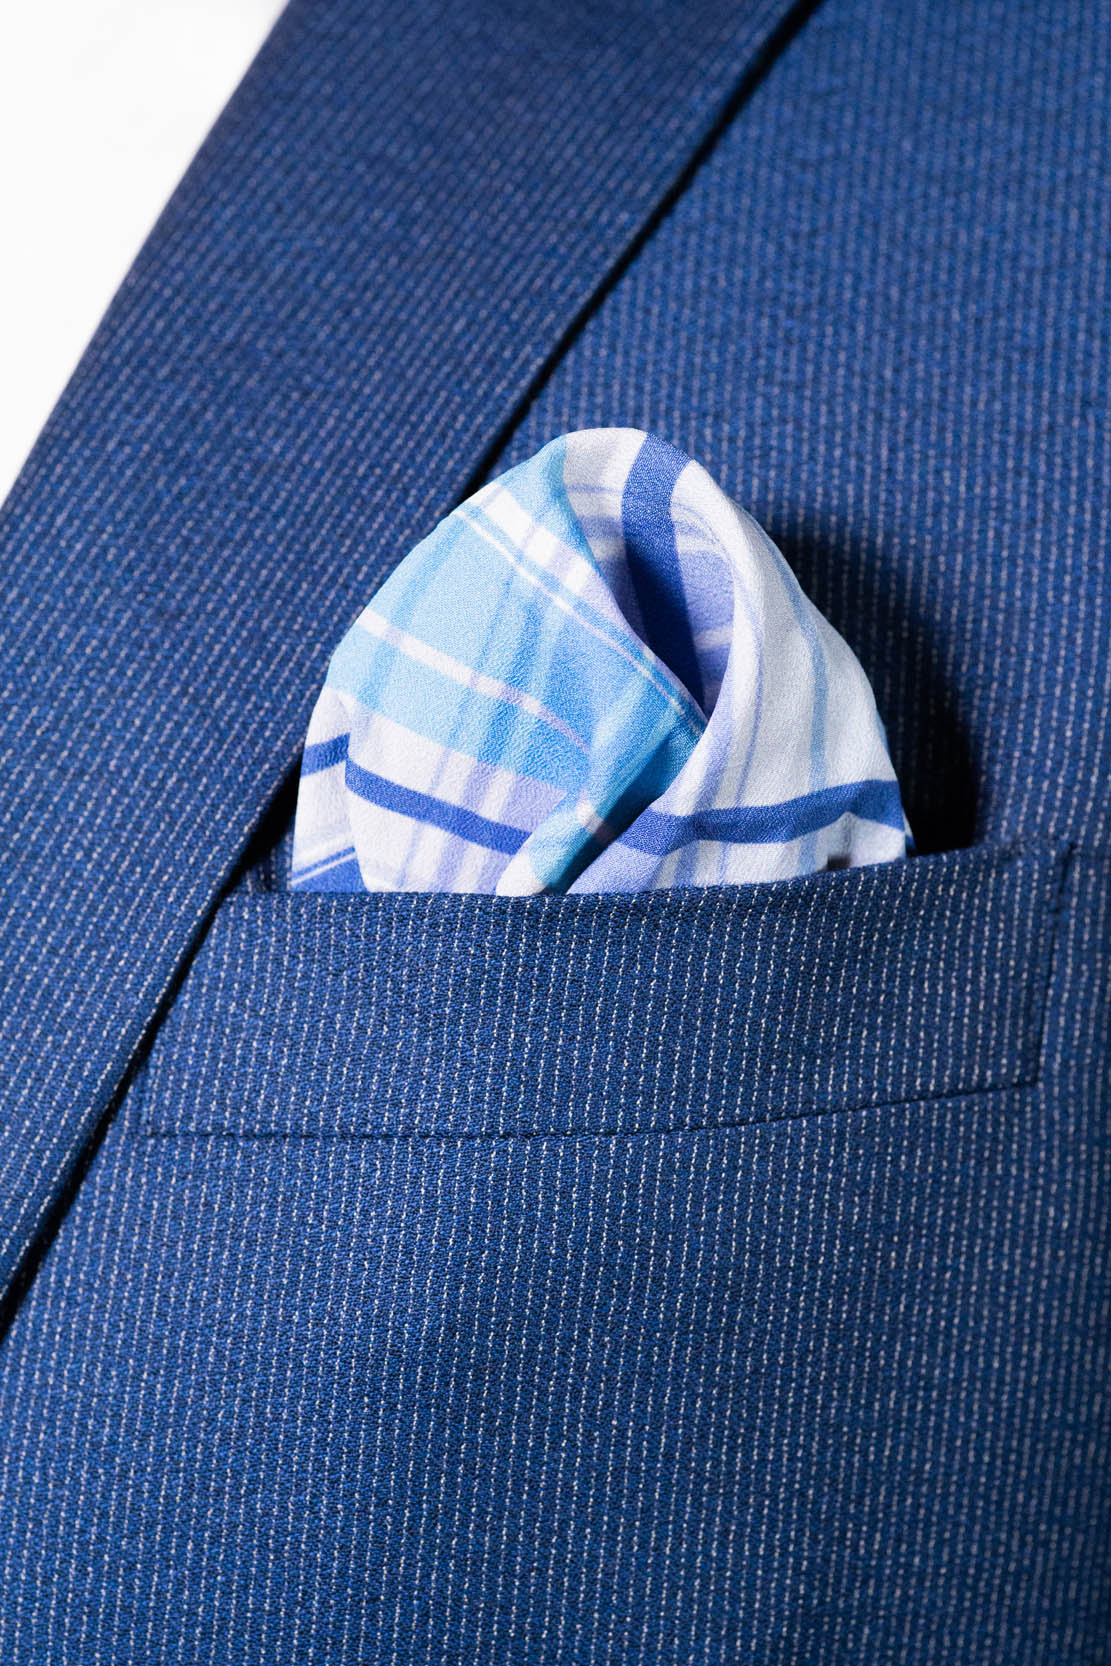 RARE CUT's Mykonos Blue Pocket Square Worn in a Suit